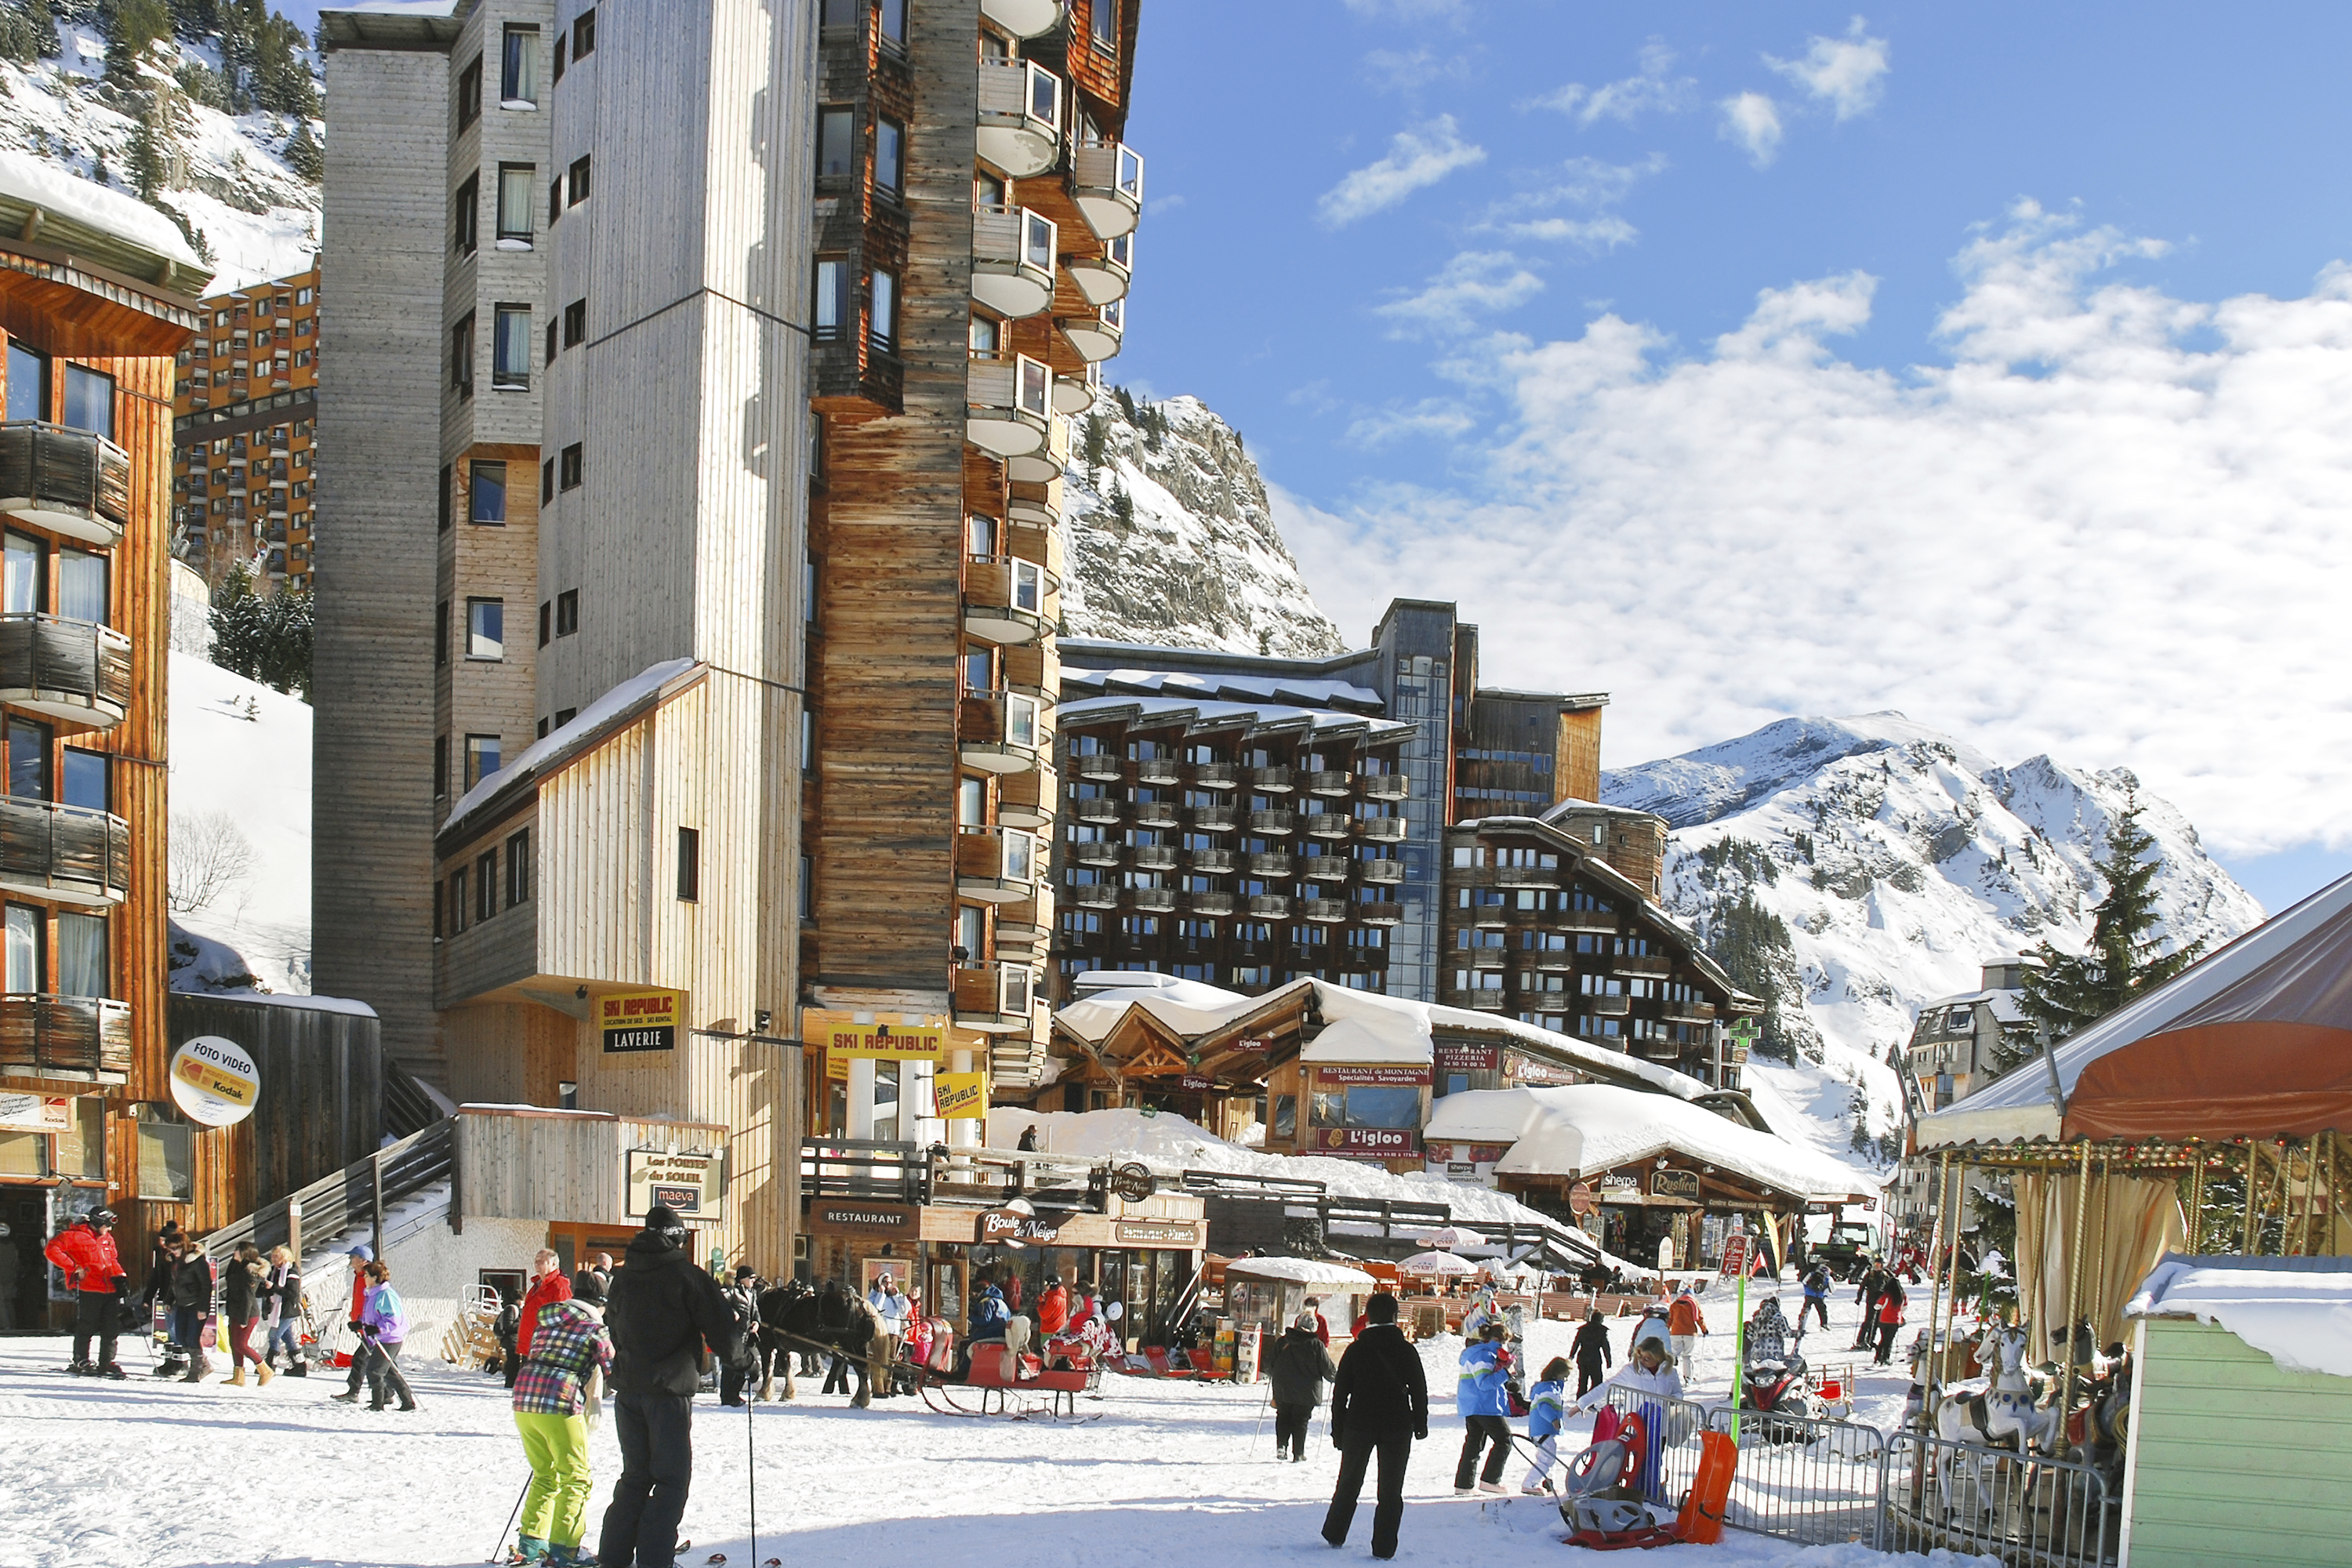 Les Portes du Soleil is a major ski area in the Alps